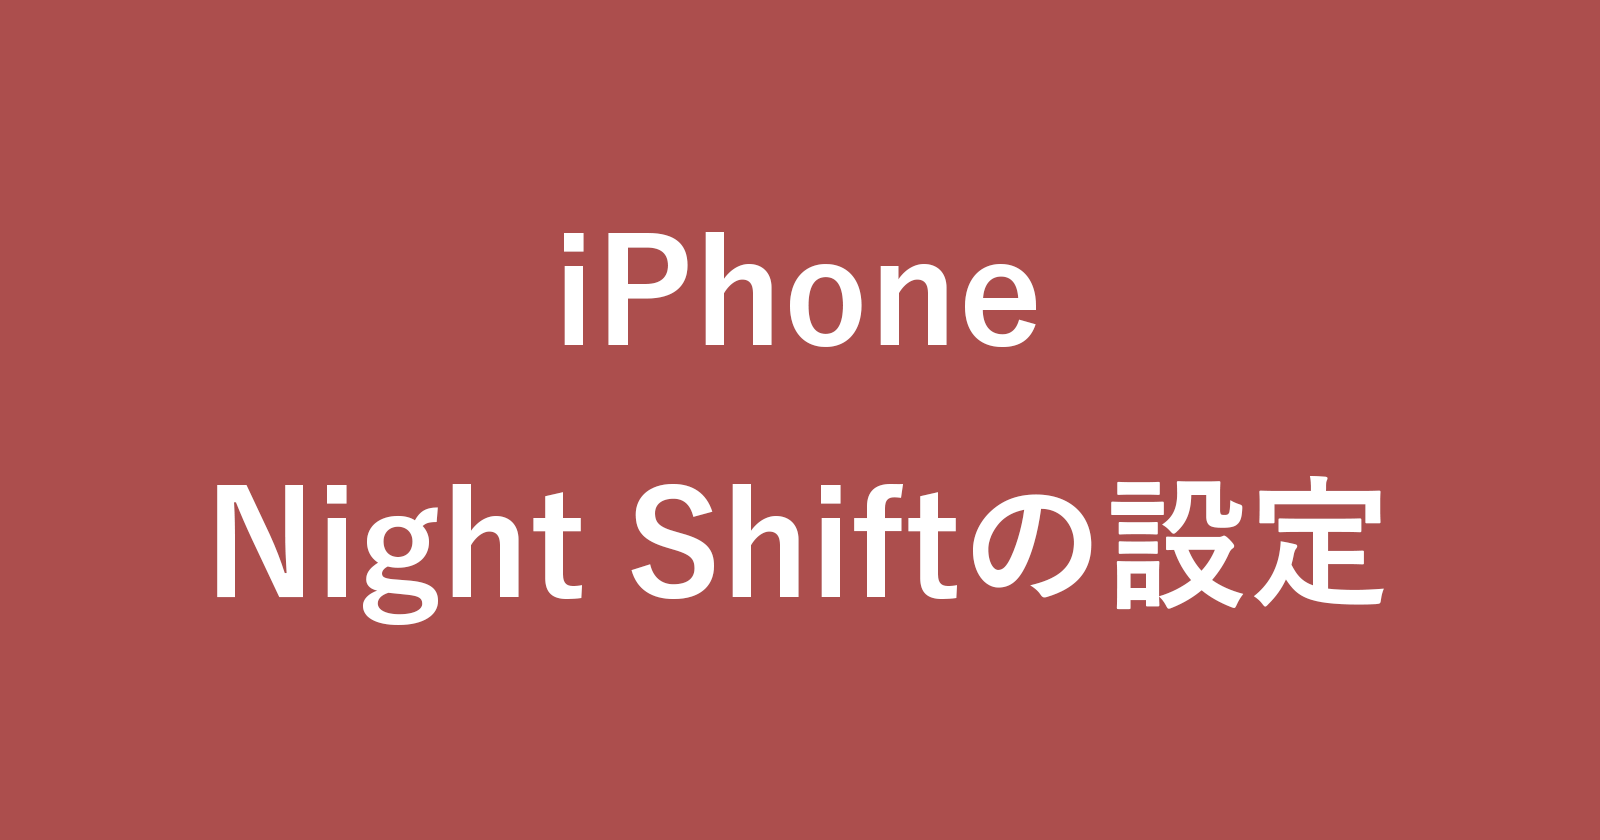 iphone night shift